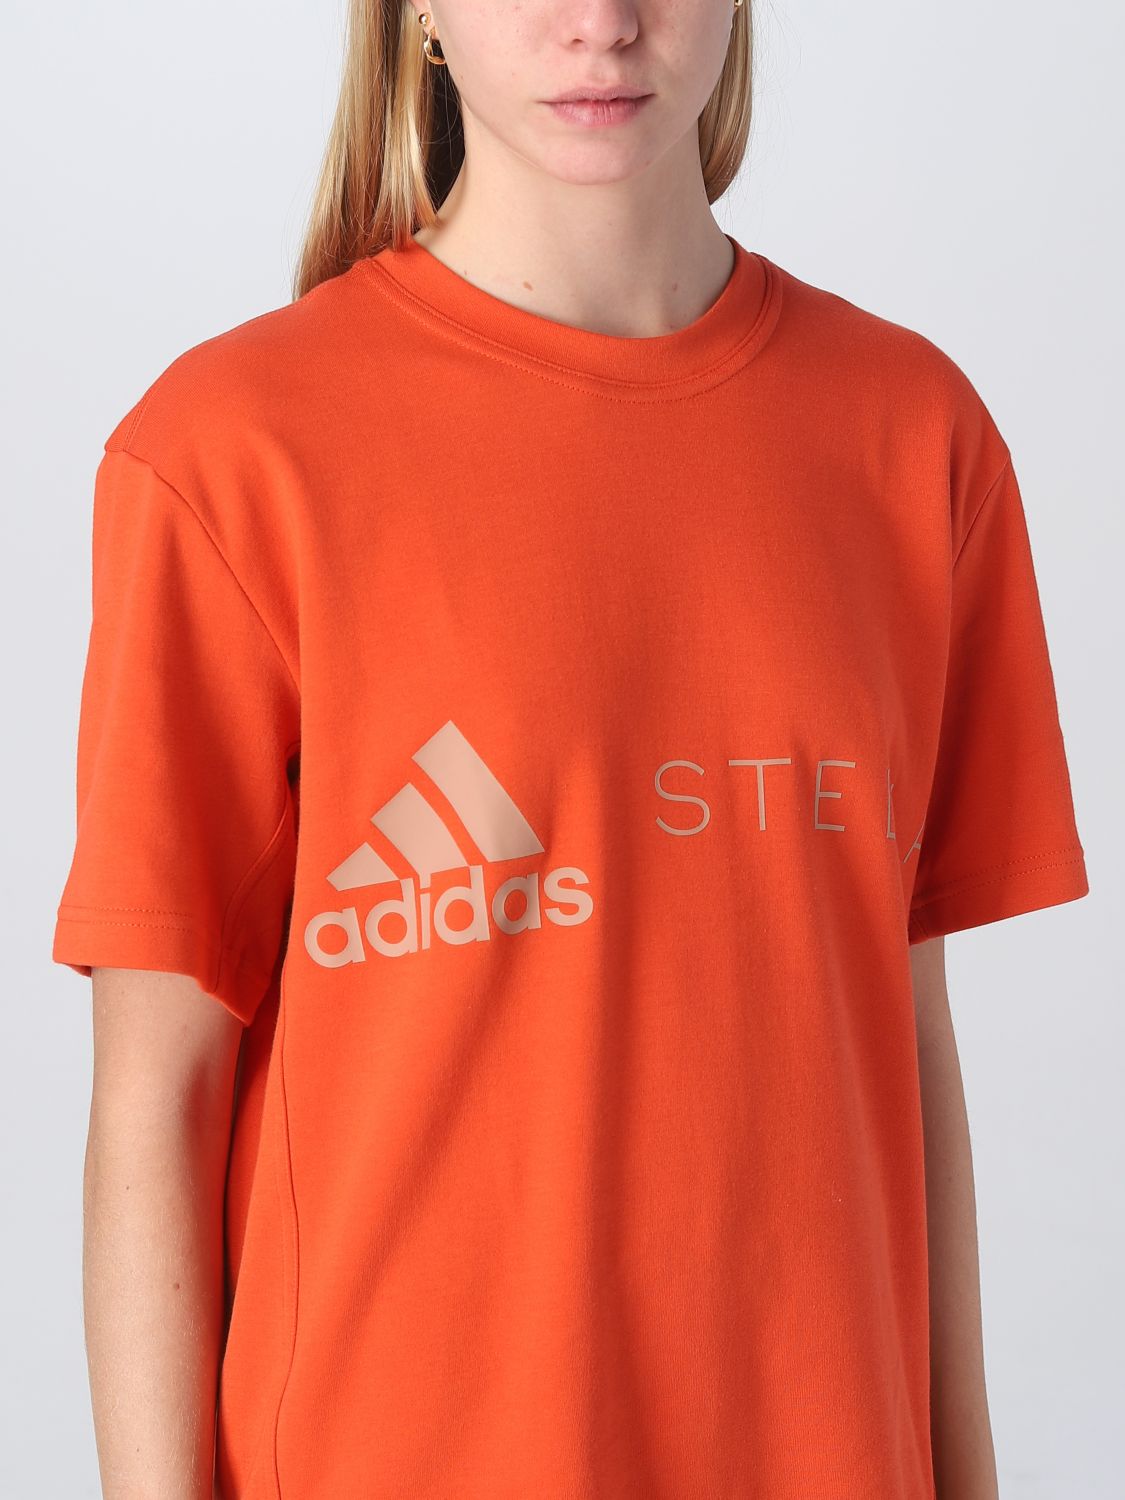 BY STELLA MCCARTNEY: Camiseta para mujer, | Camiseta Adidas By Stella Mccartney HR2221 en en GIGLIO.COM